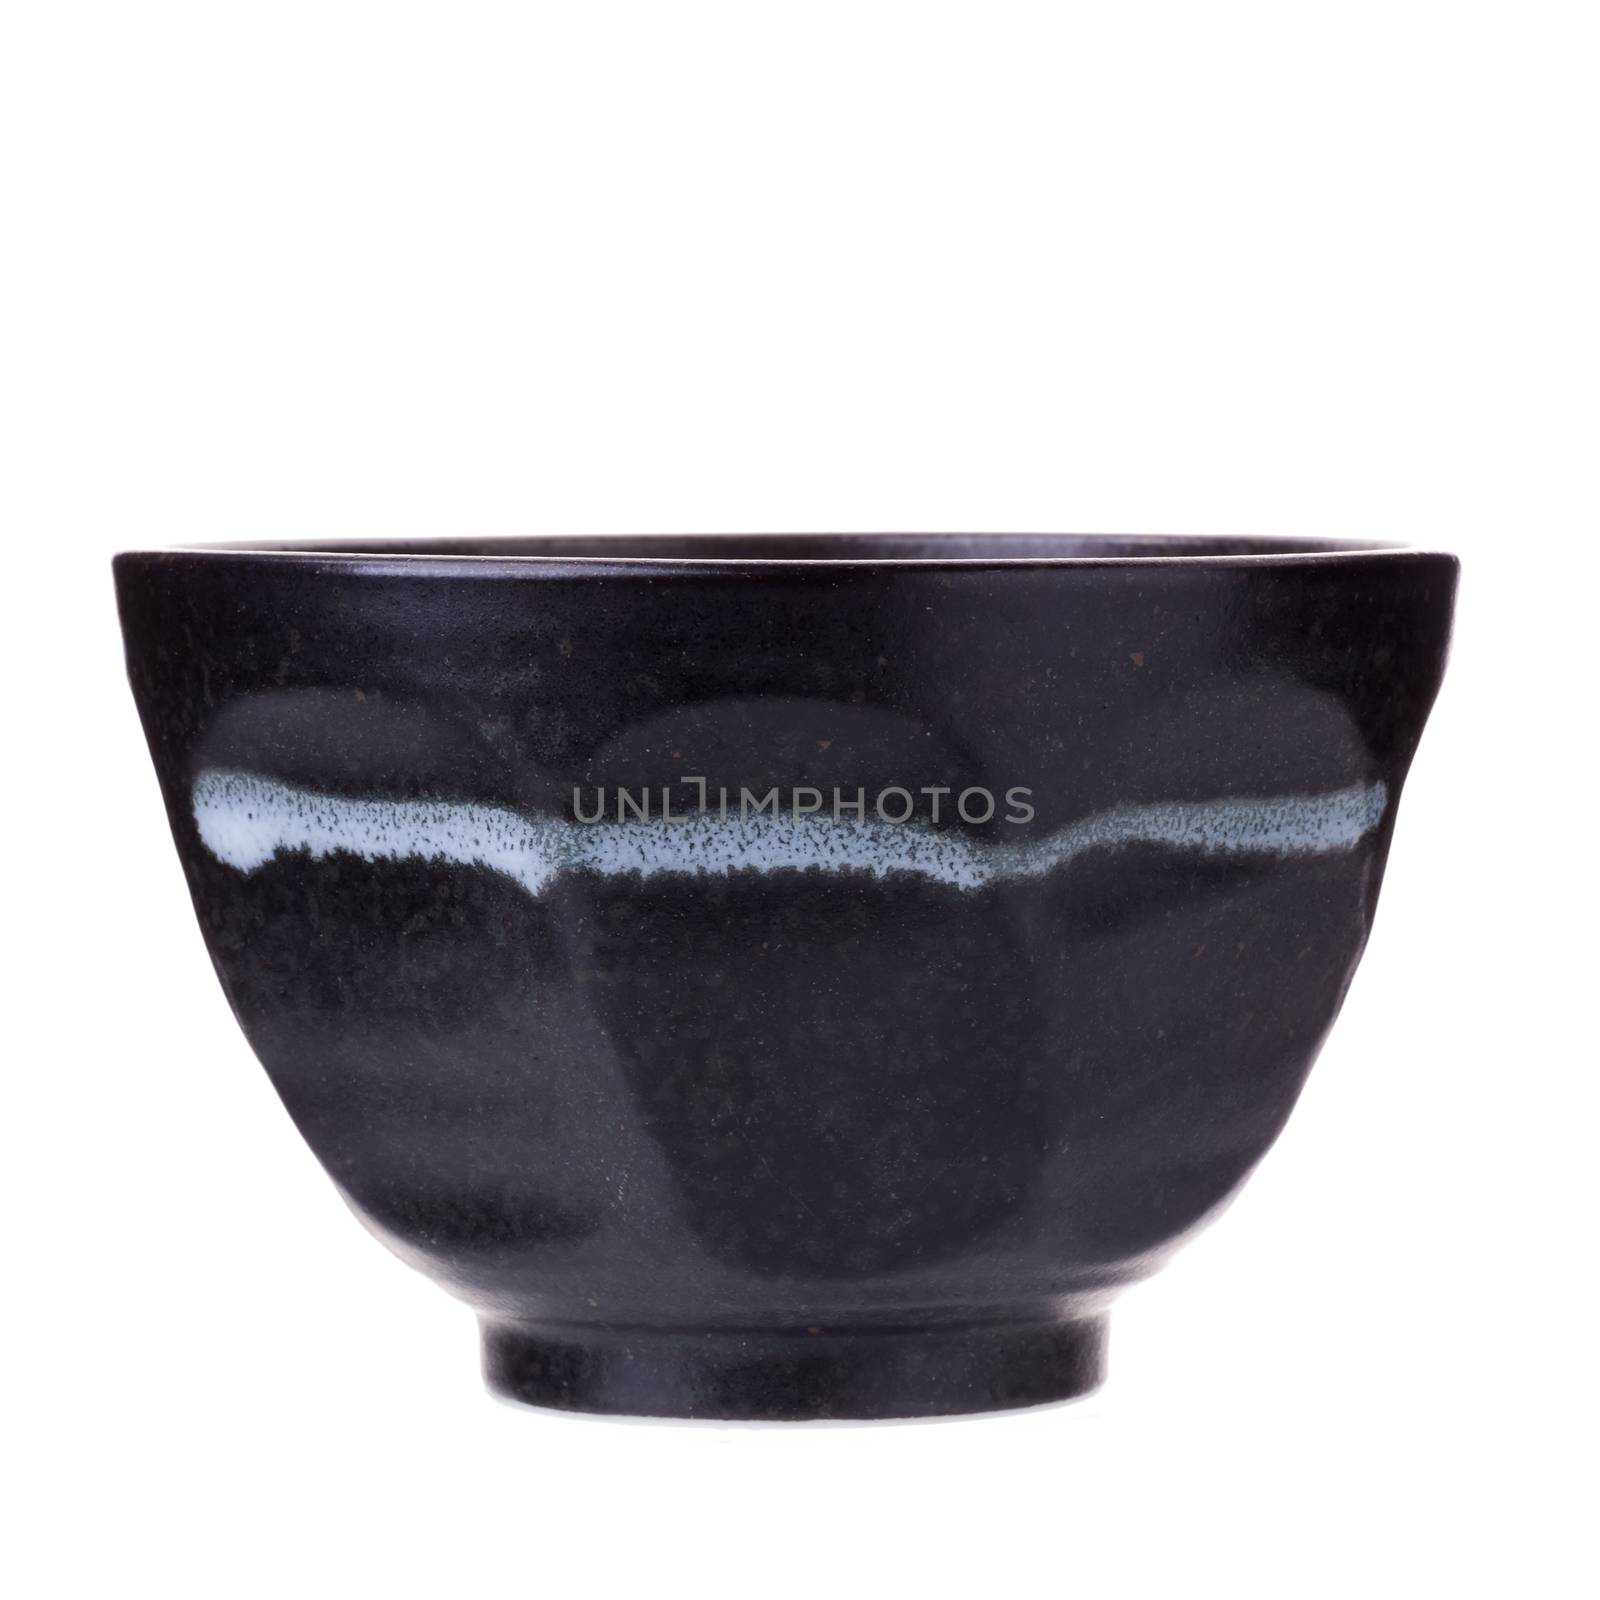 black ceramic bowl on a white background